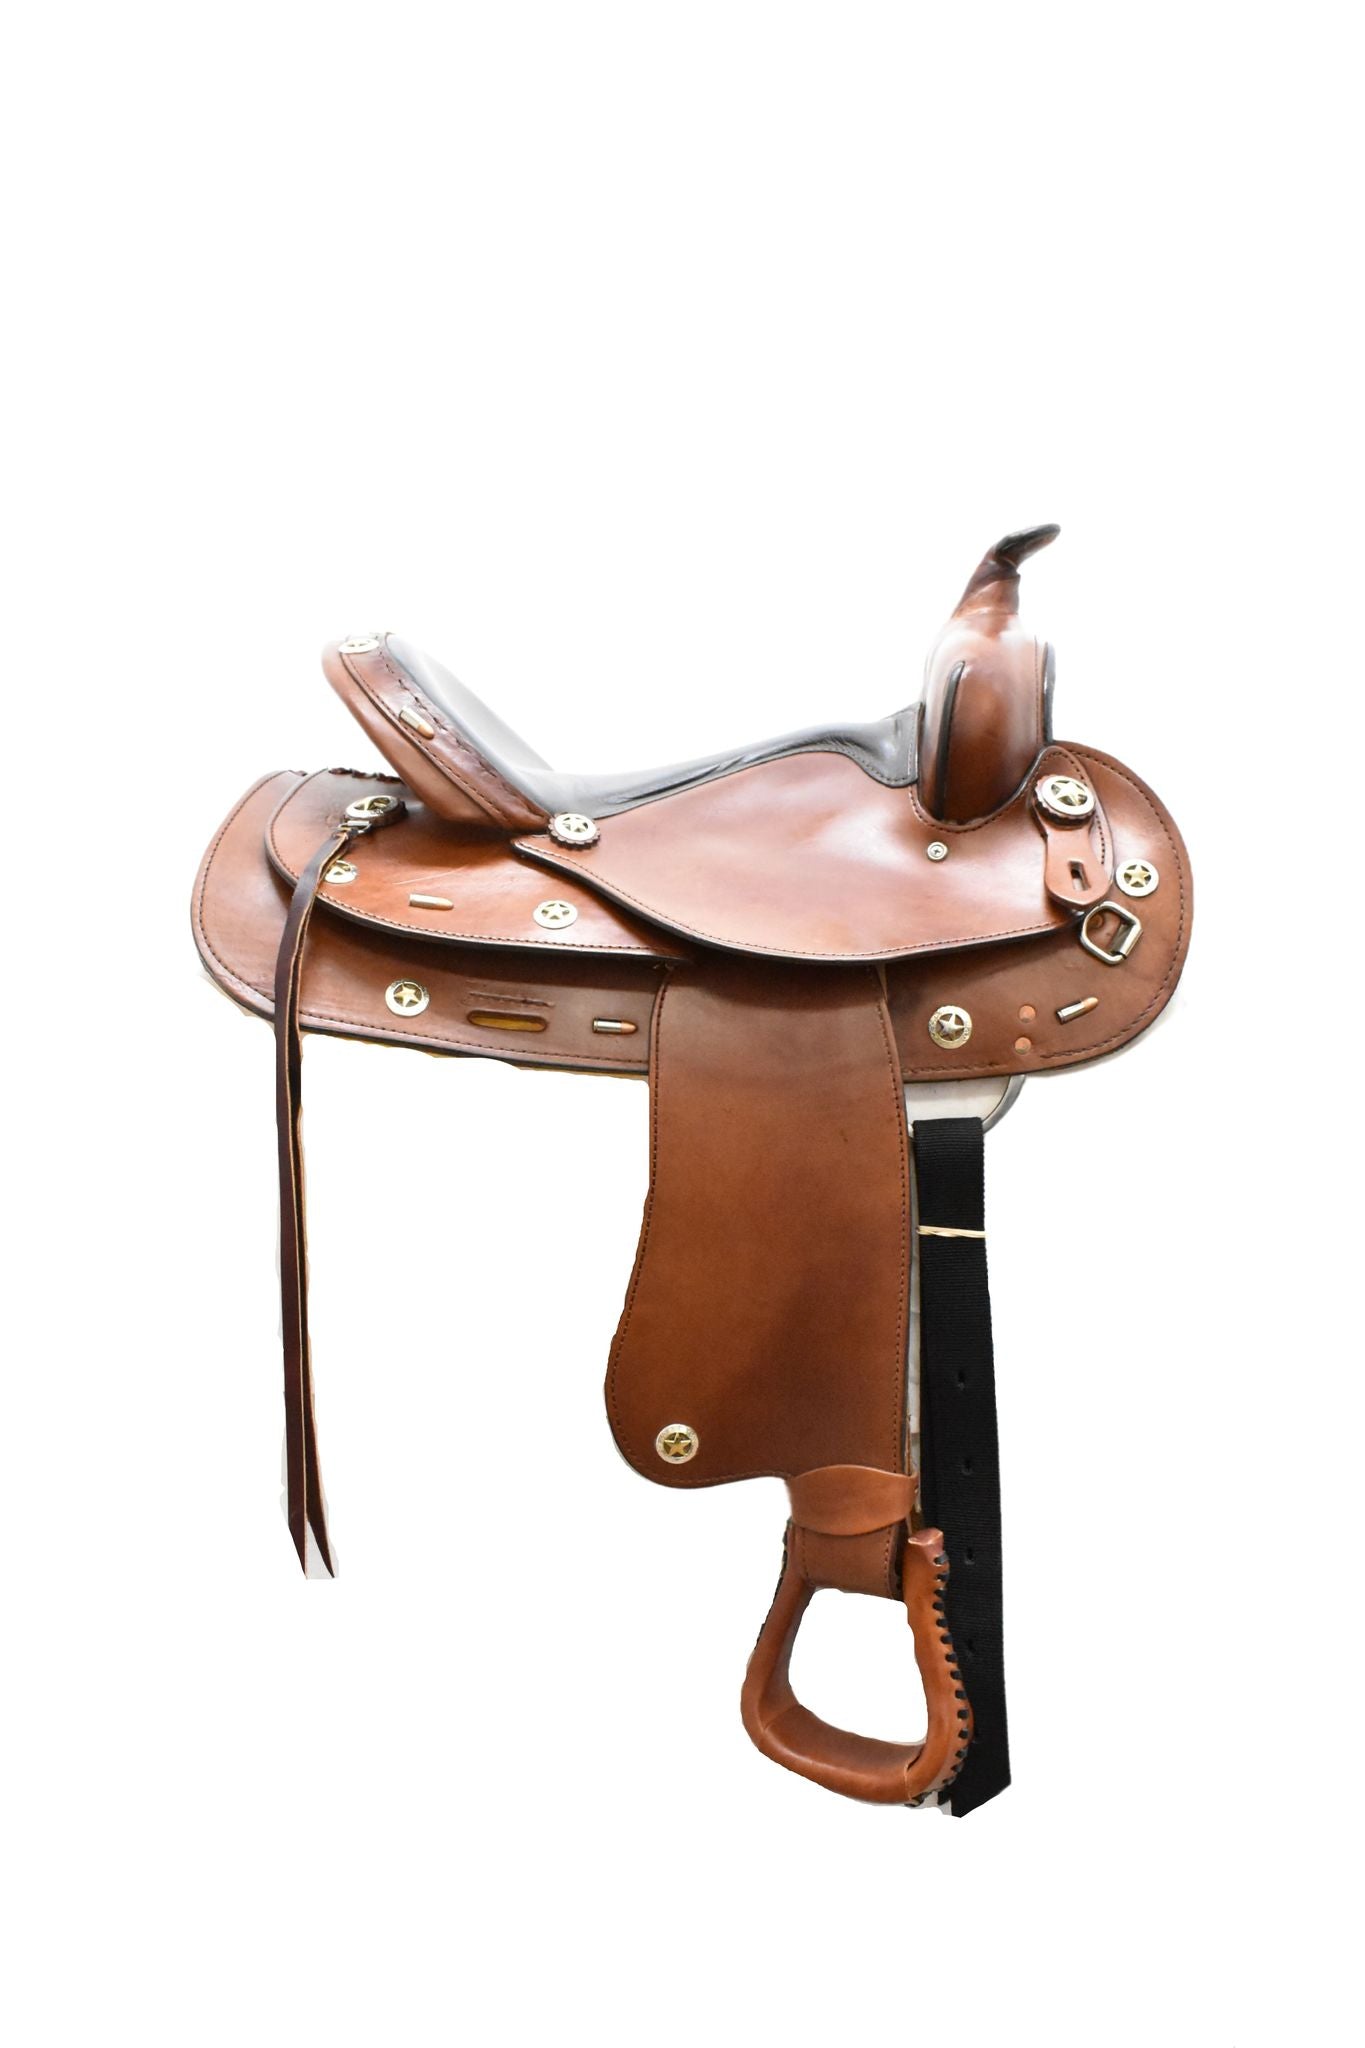 Used H&H 16" Trail Saddle with Star & Bullet Conchos #154 Wide Bar US1864/3-EFEFPR-D